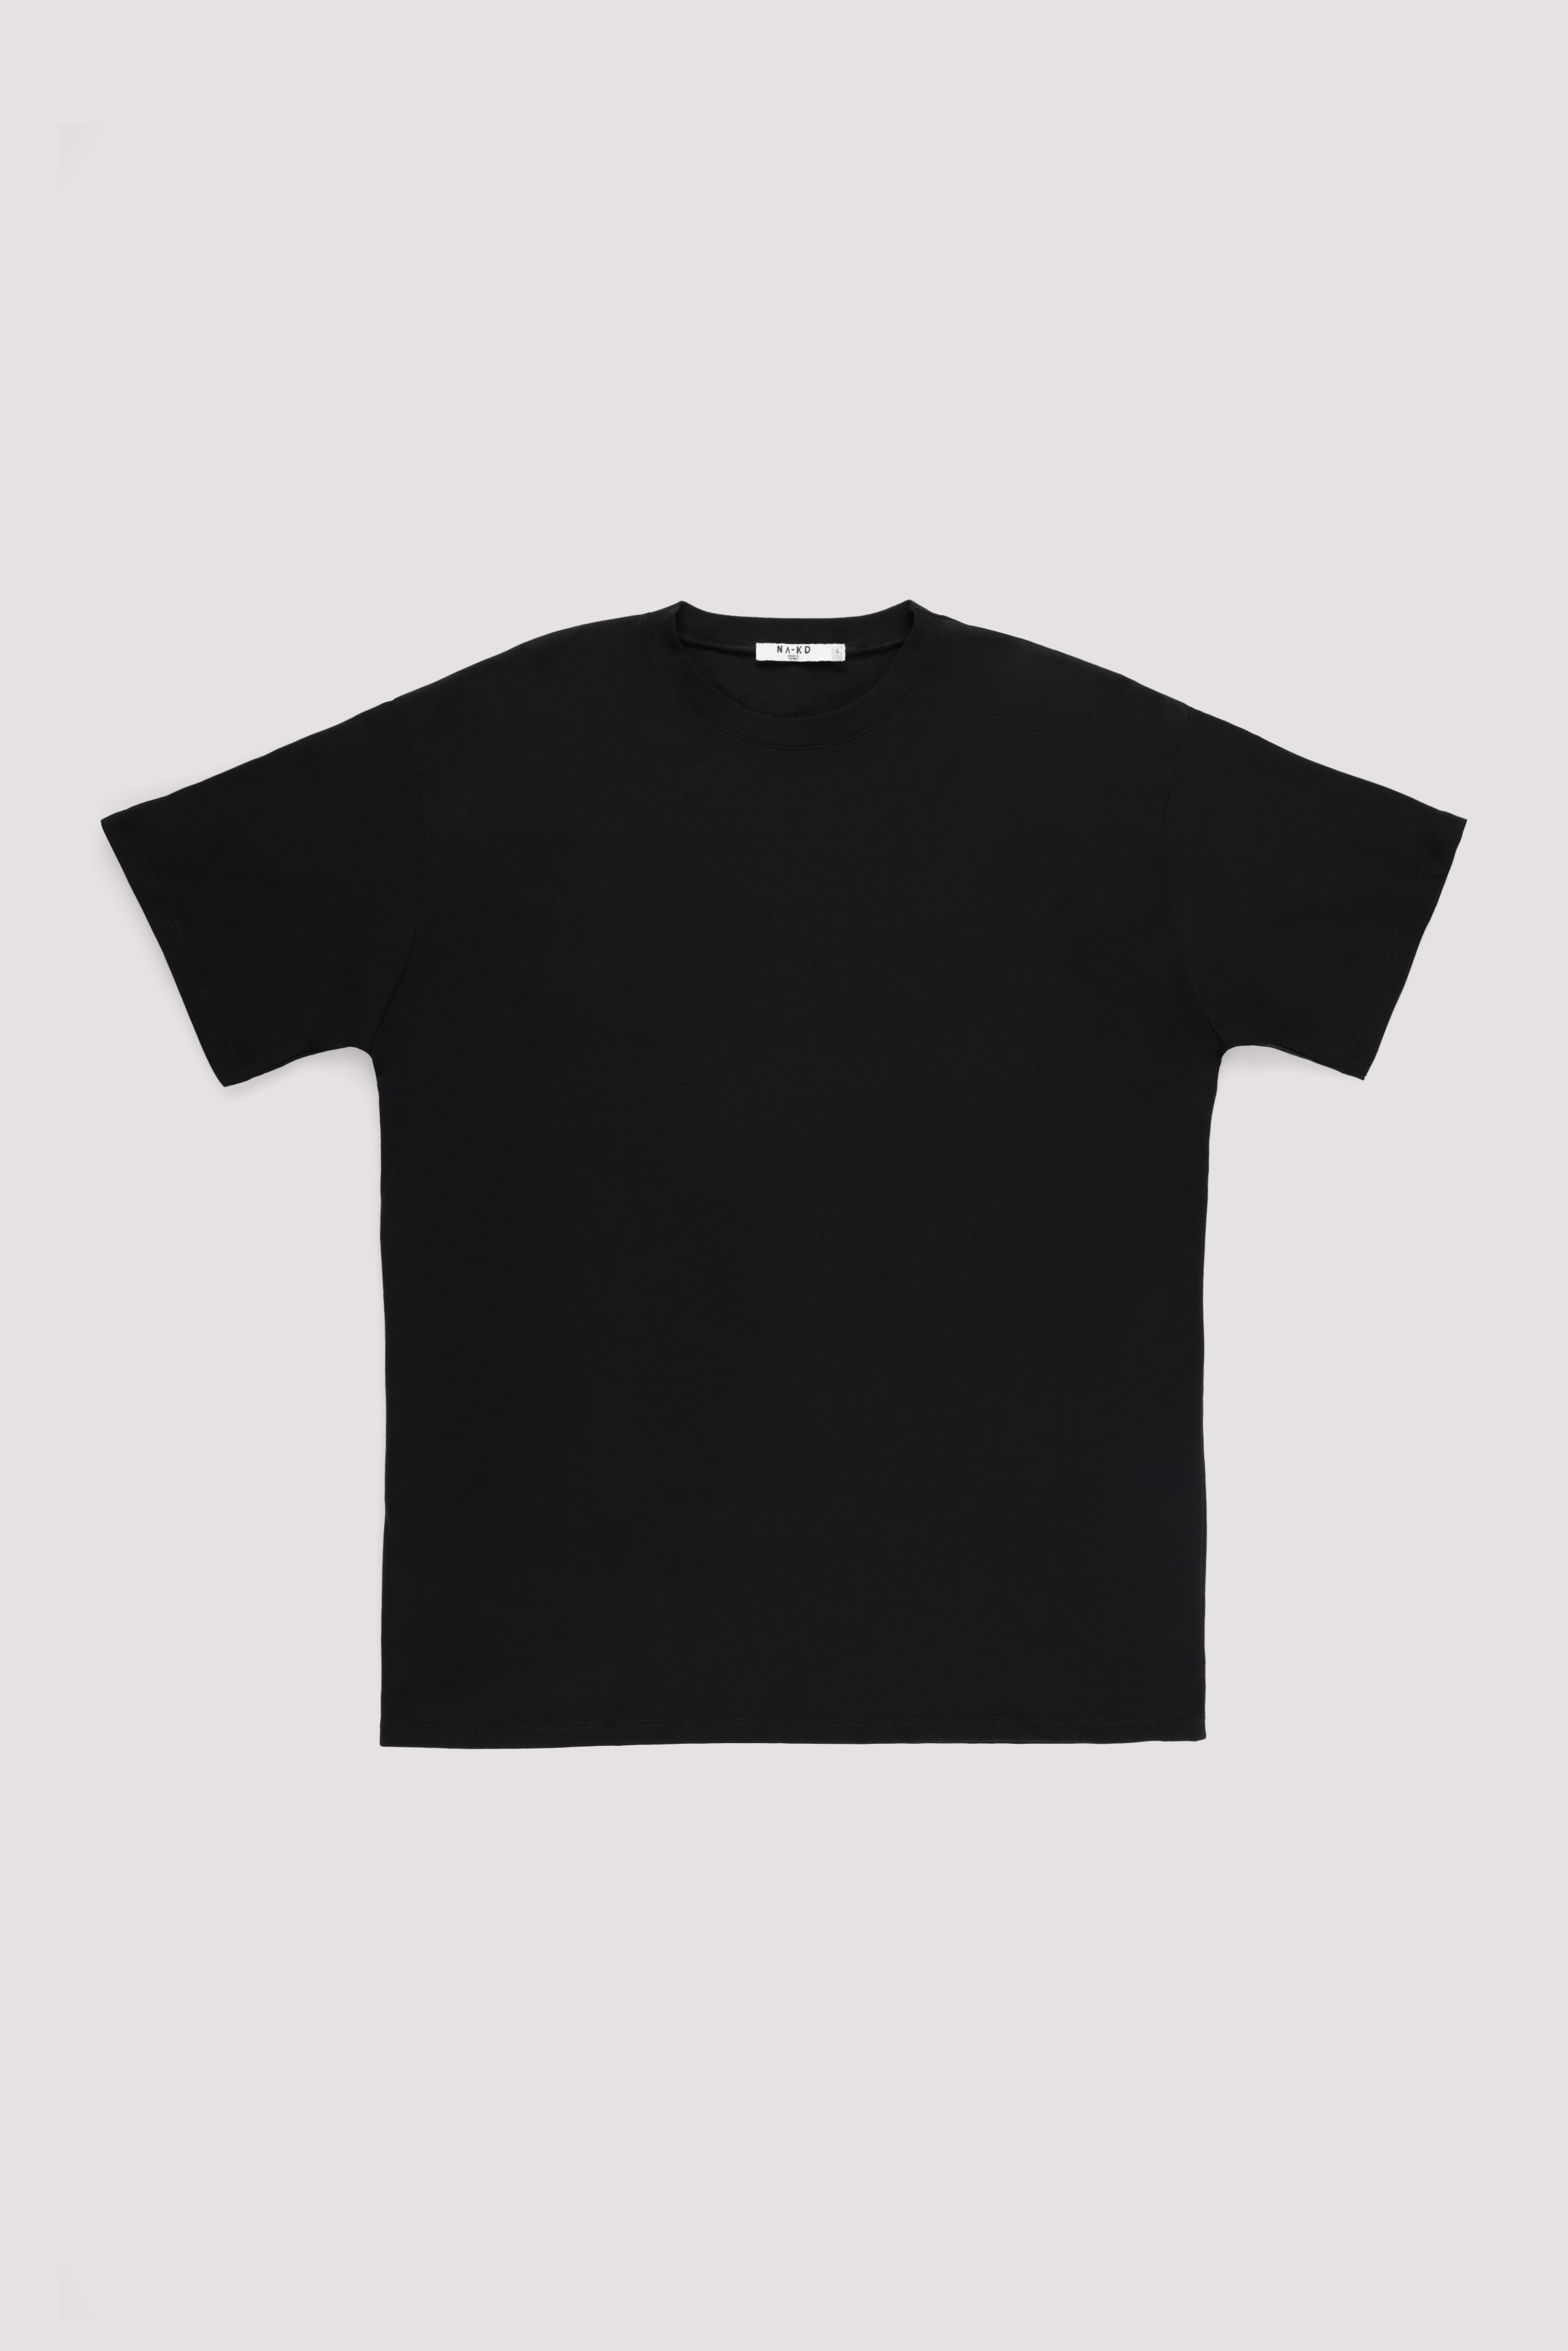 mit Oversize T-Shirt Organic Ausschnitt rundem Schwarz NA-KD |